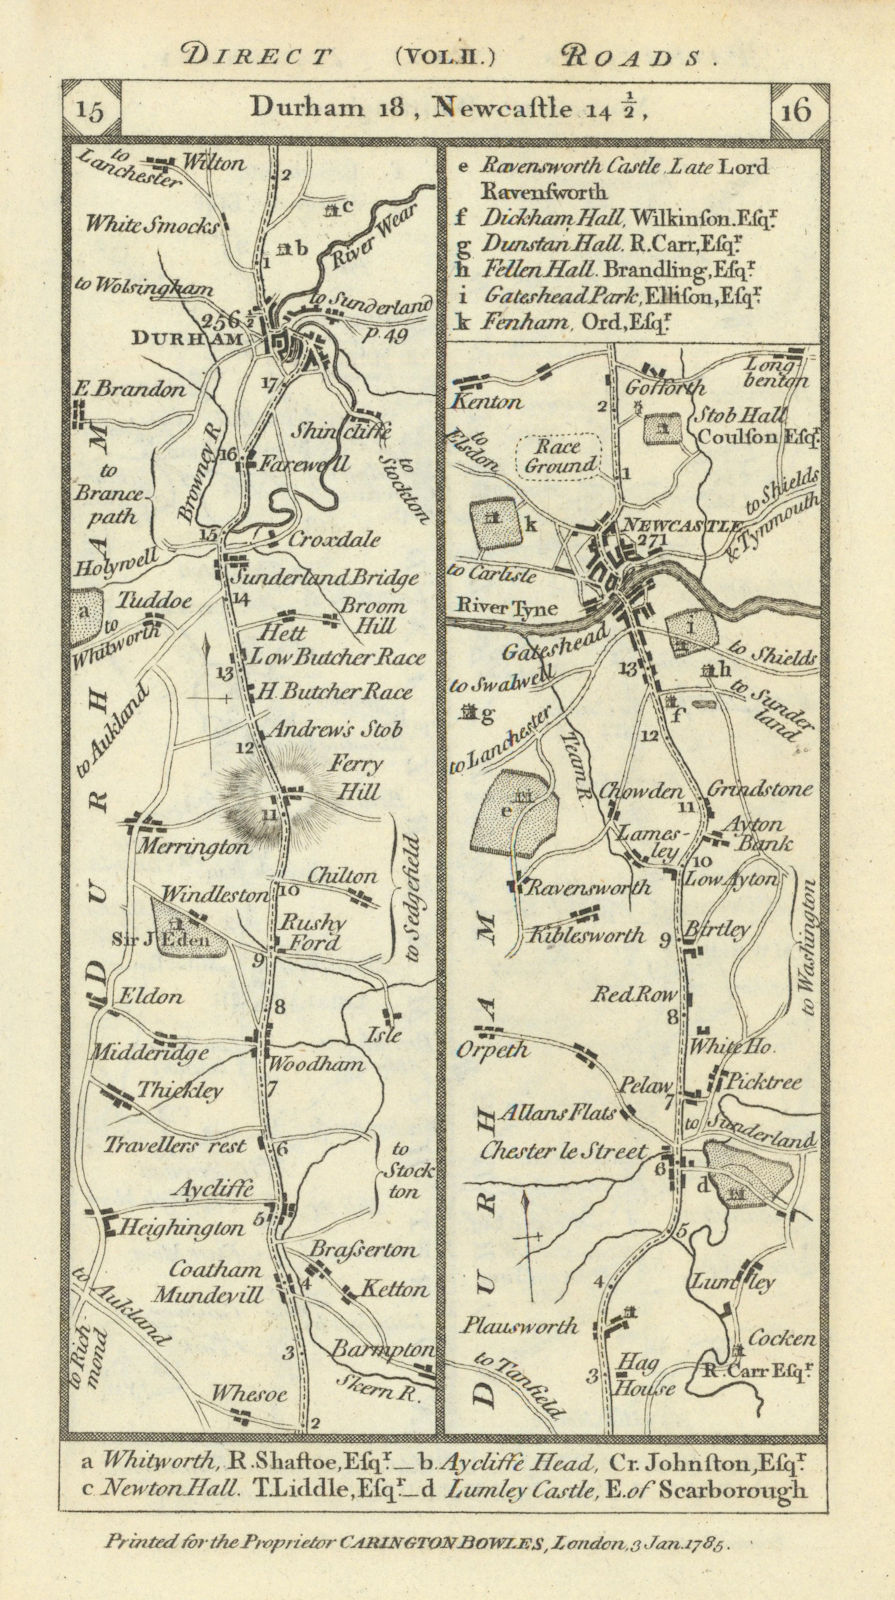 Associate Product Durham-Chester/Street-Gateshead-Newcastle/Tyne road strip map PATERSON 1785